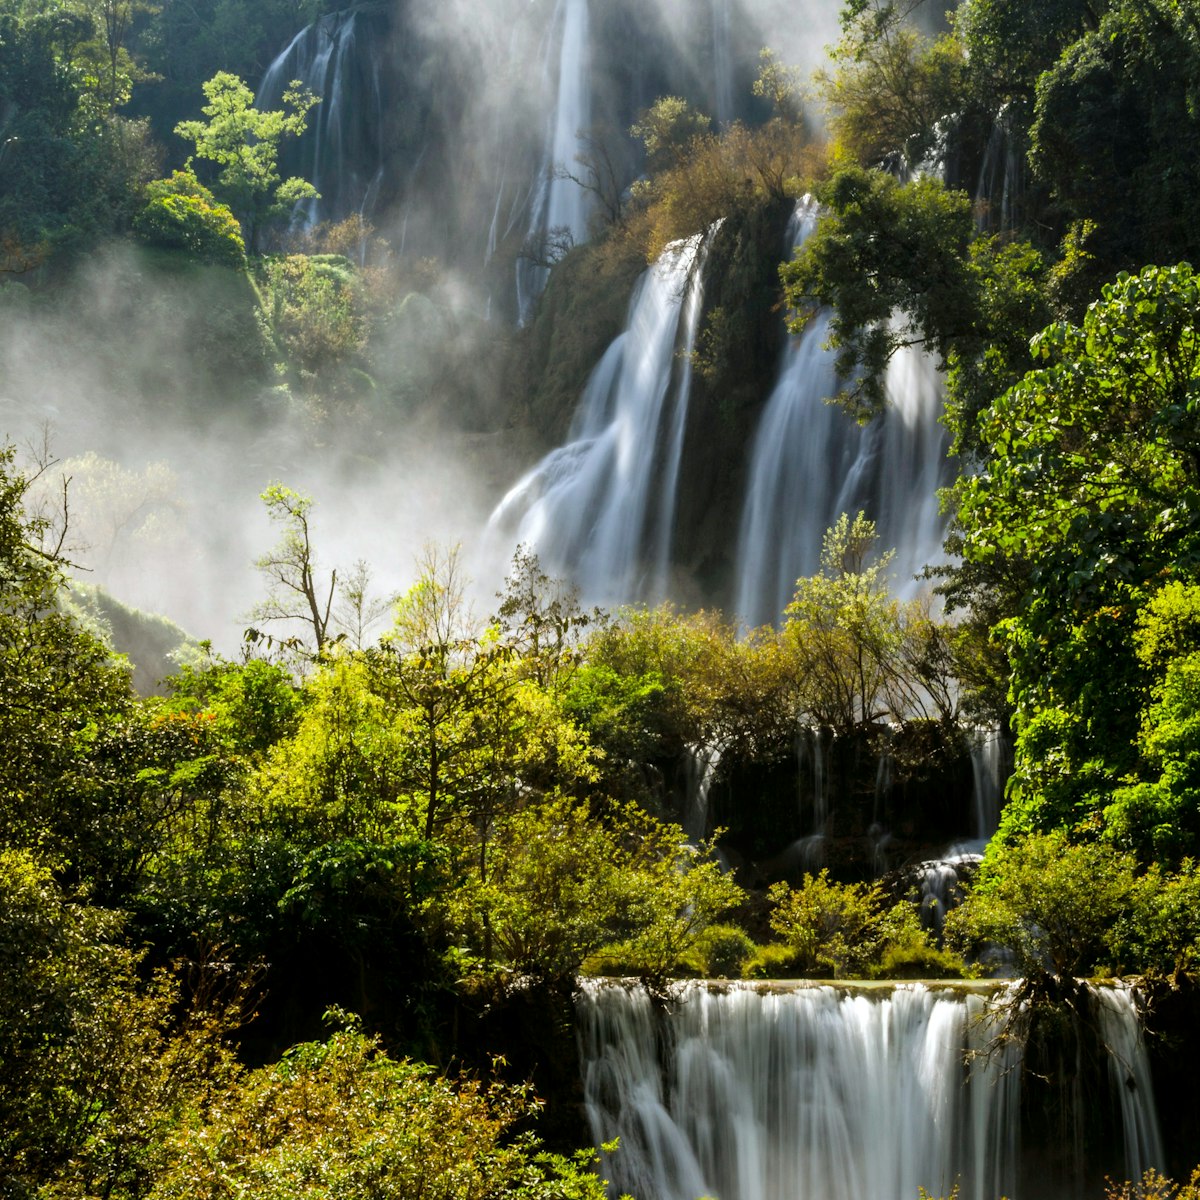 Nam Tok Thilawsu waterfall.

